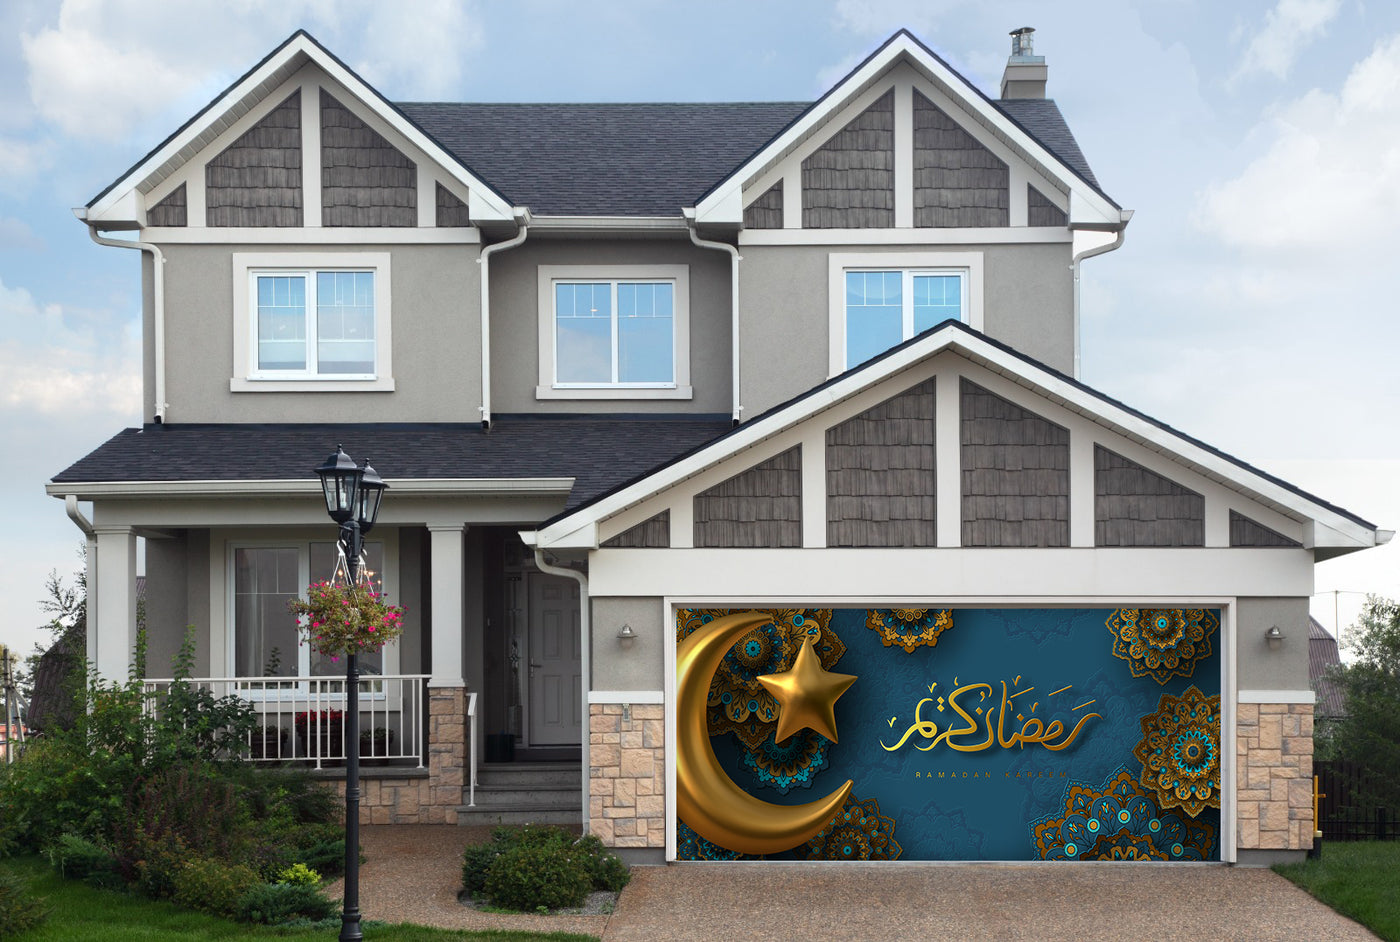 Ramadan Kareem Banner With 3d Metallic Golden Crescent Moon